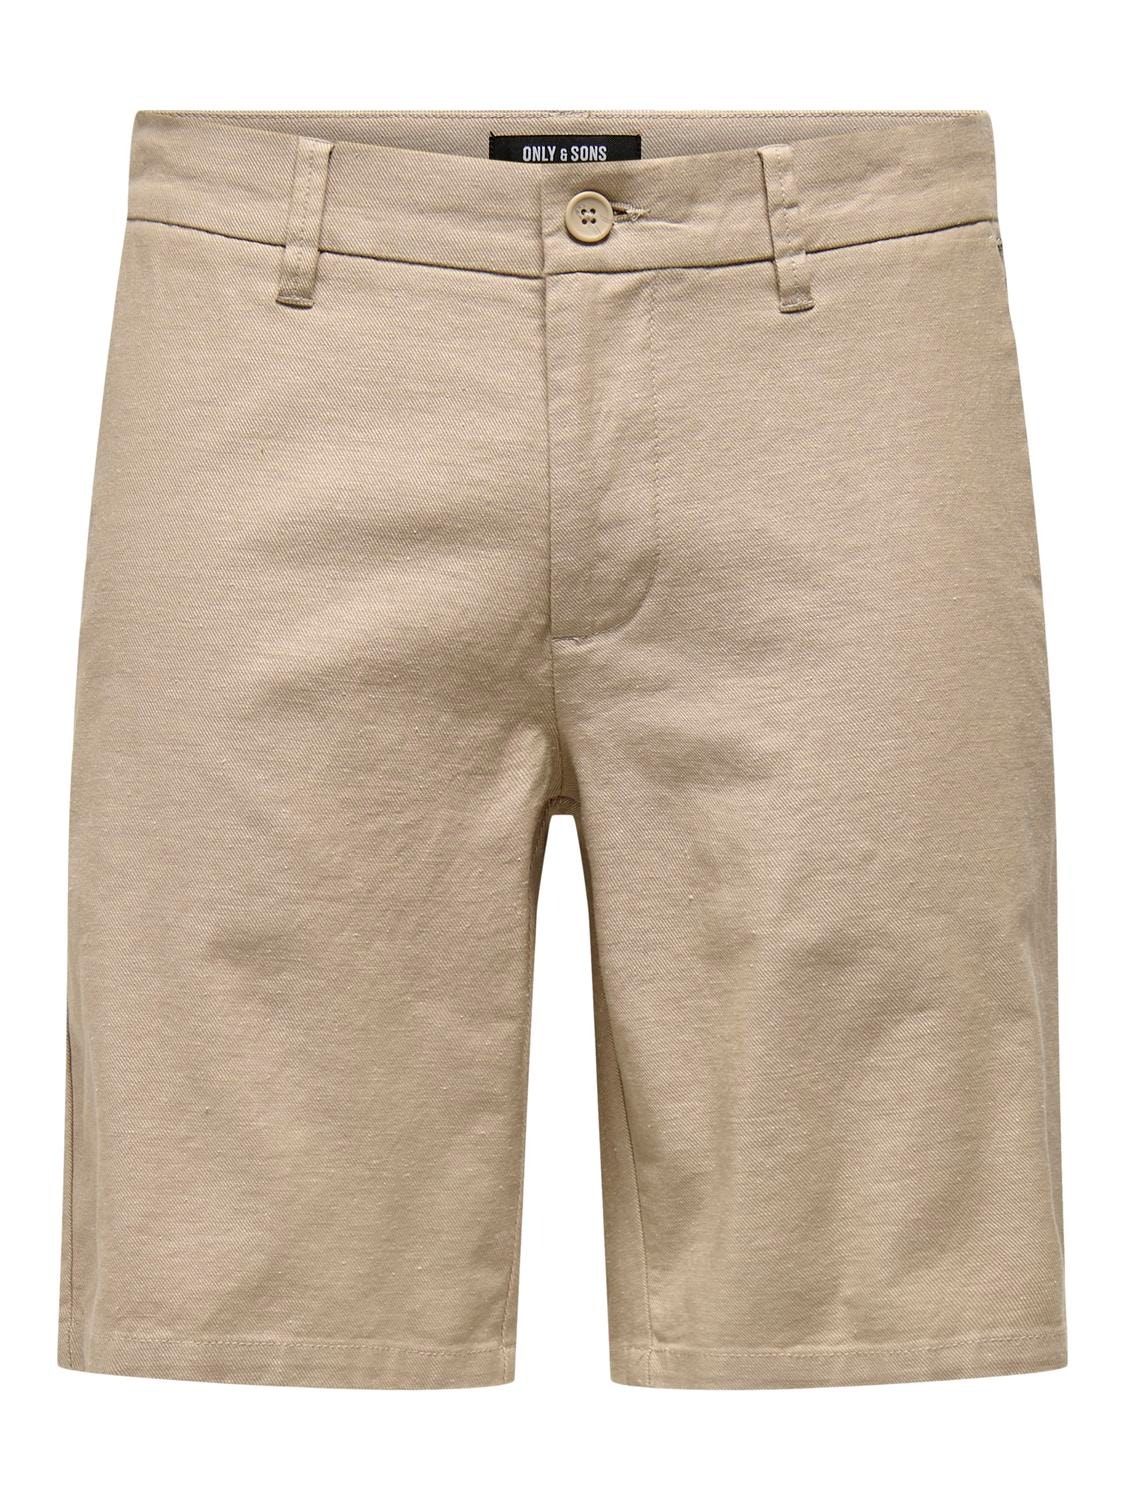 ONLY & SONS Normal geschnitten Shorts -Chinchilla - 22024940